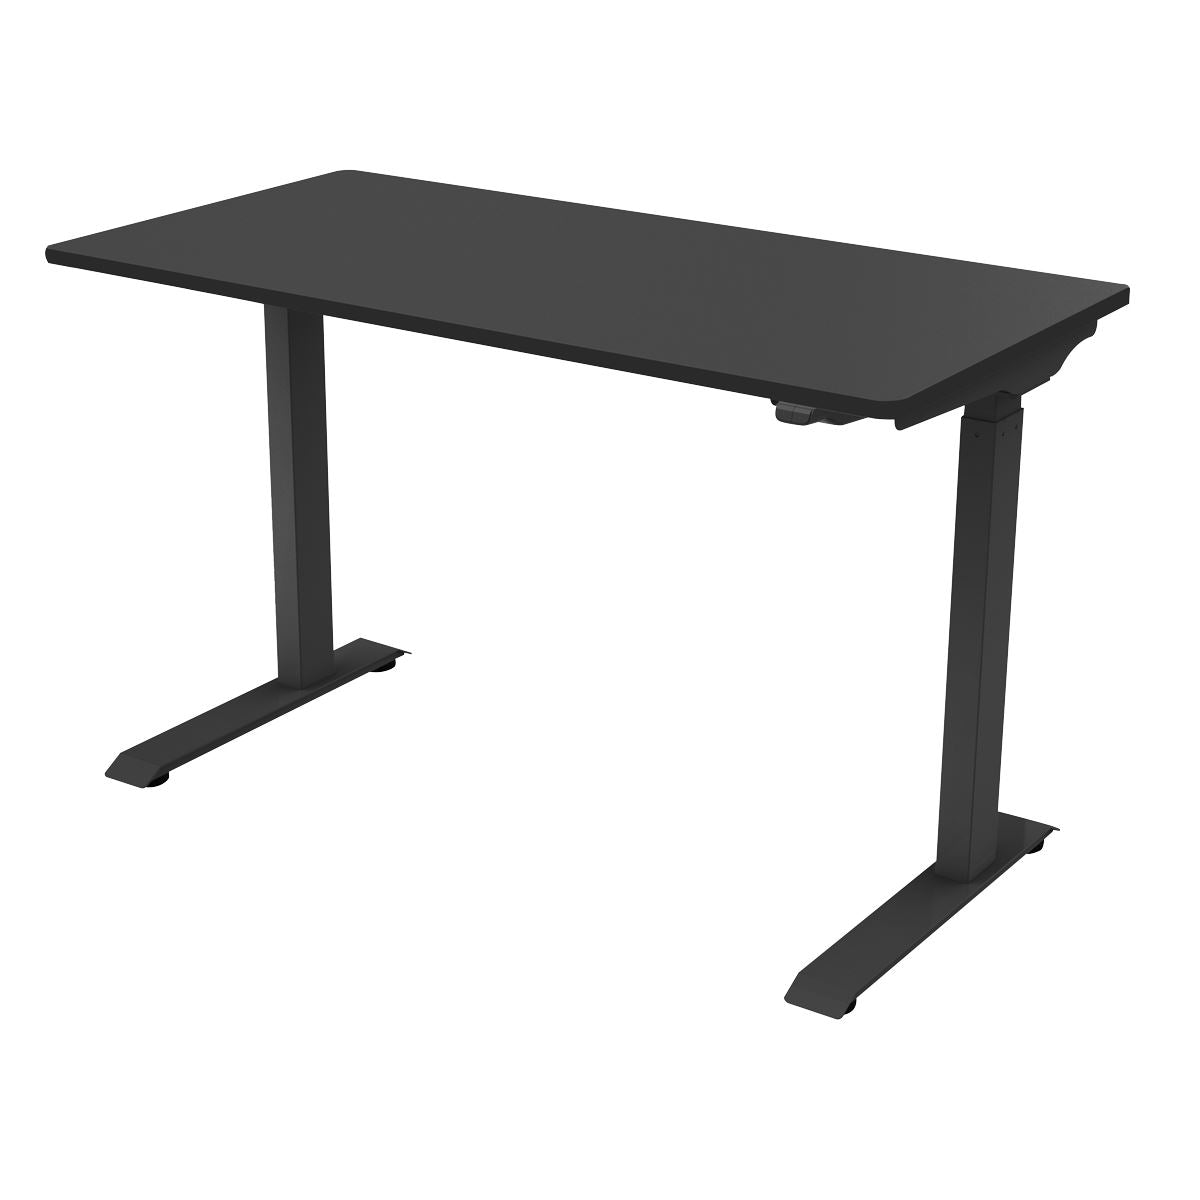 Dellonda Black Electric Adjustable Office Standing Desk, Quiet & Fast 1200x600mm